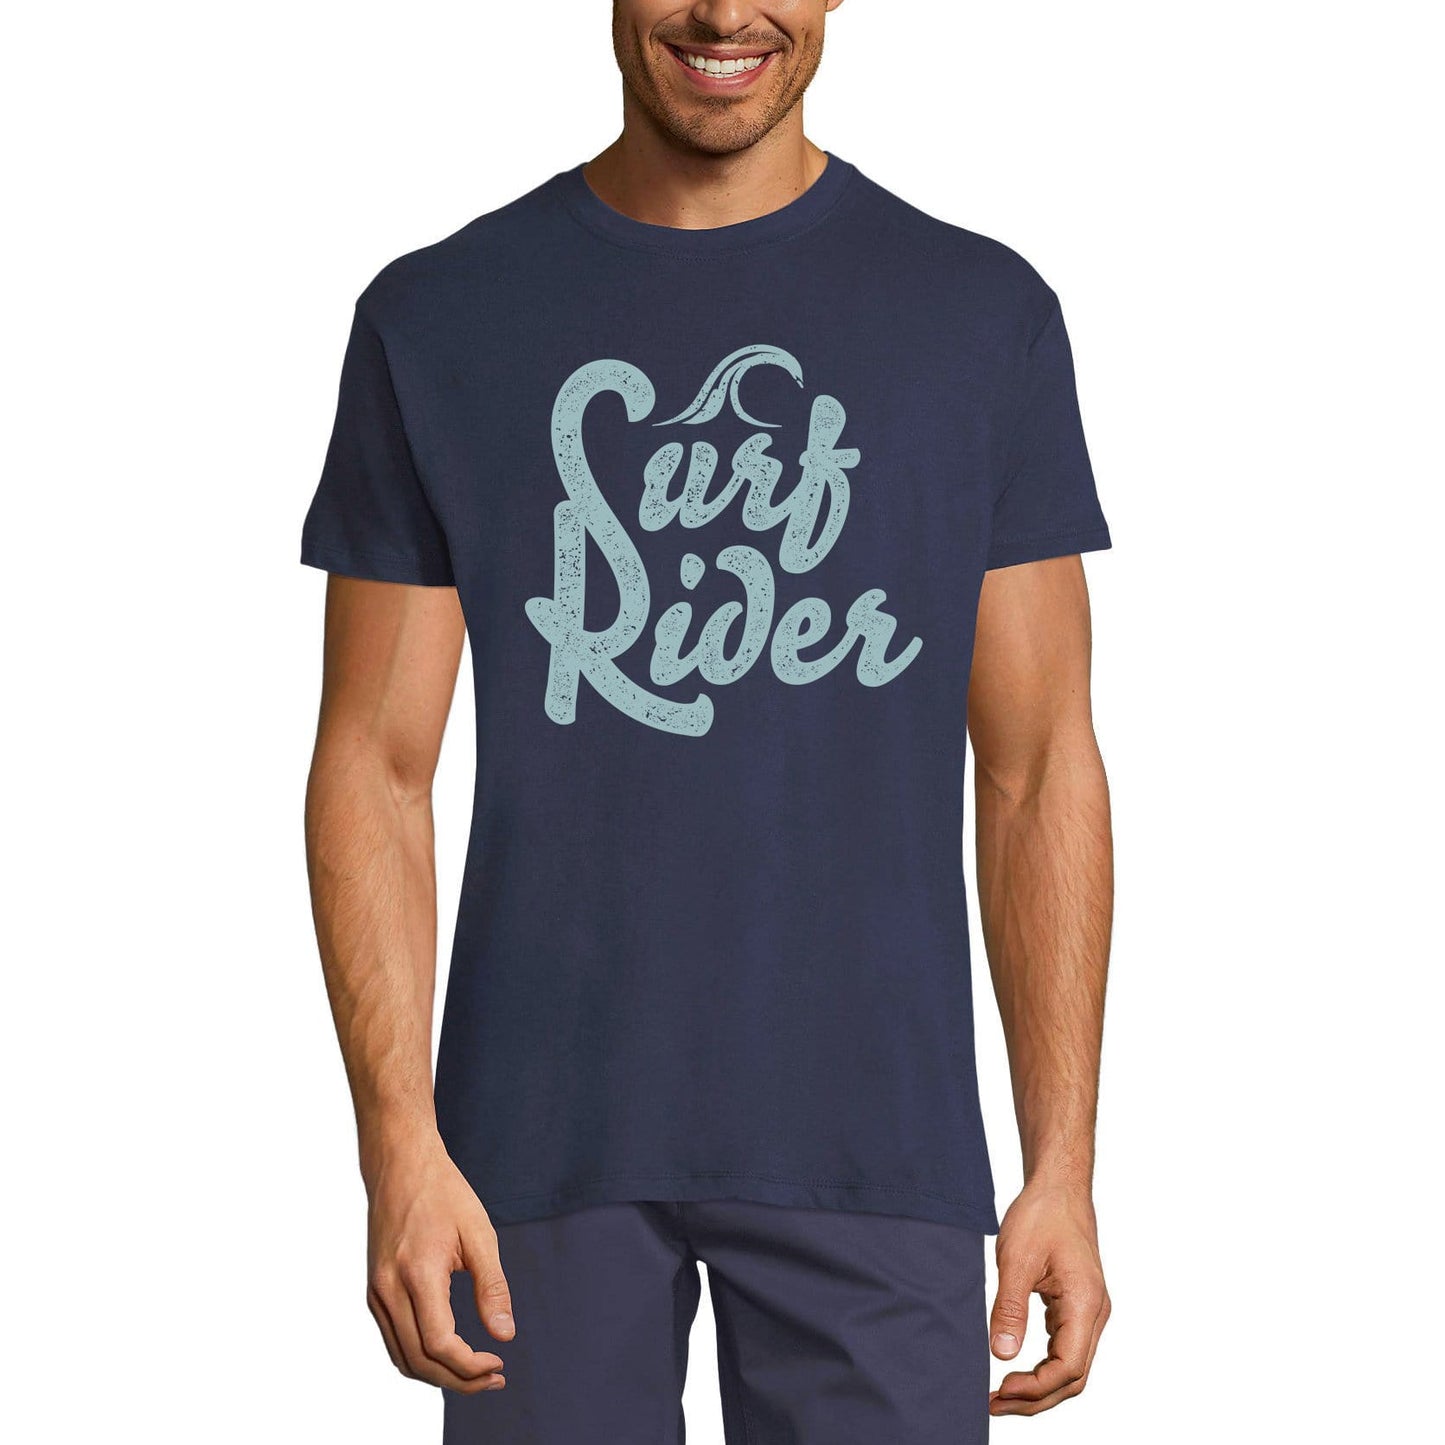 ULTRABASIC Men's Novelty T-Shirt Surf Rider - Surfing Sport Tee Shirt